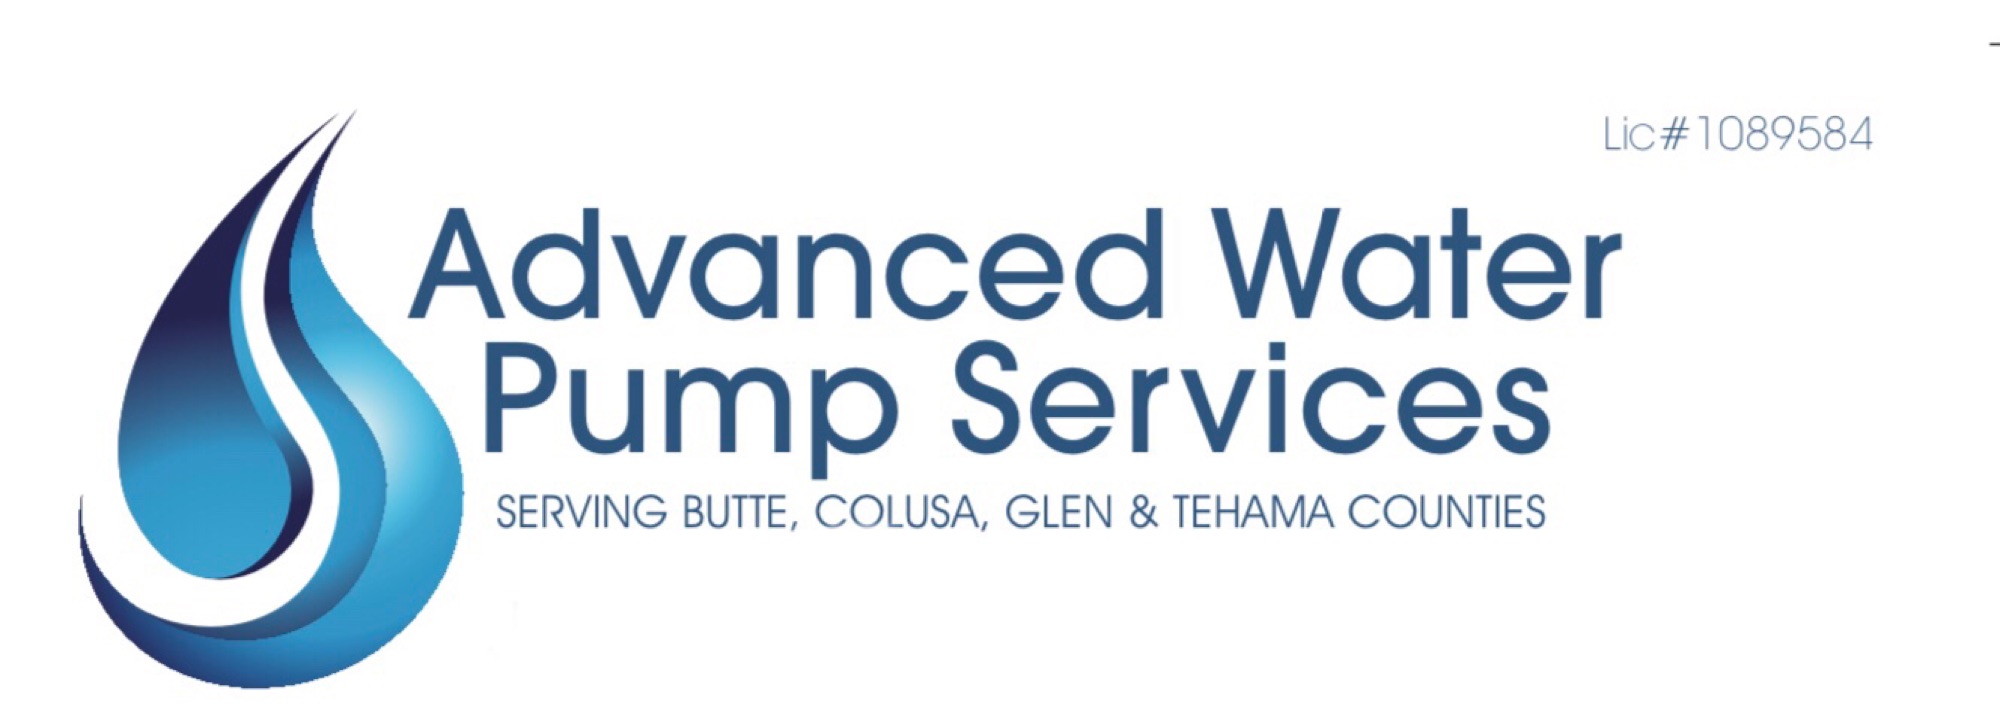 Advanced Water Pump Services Logo